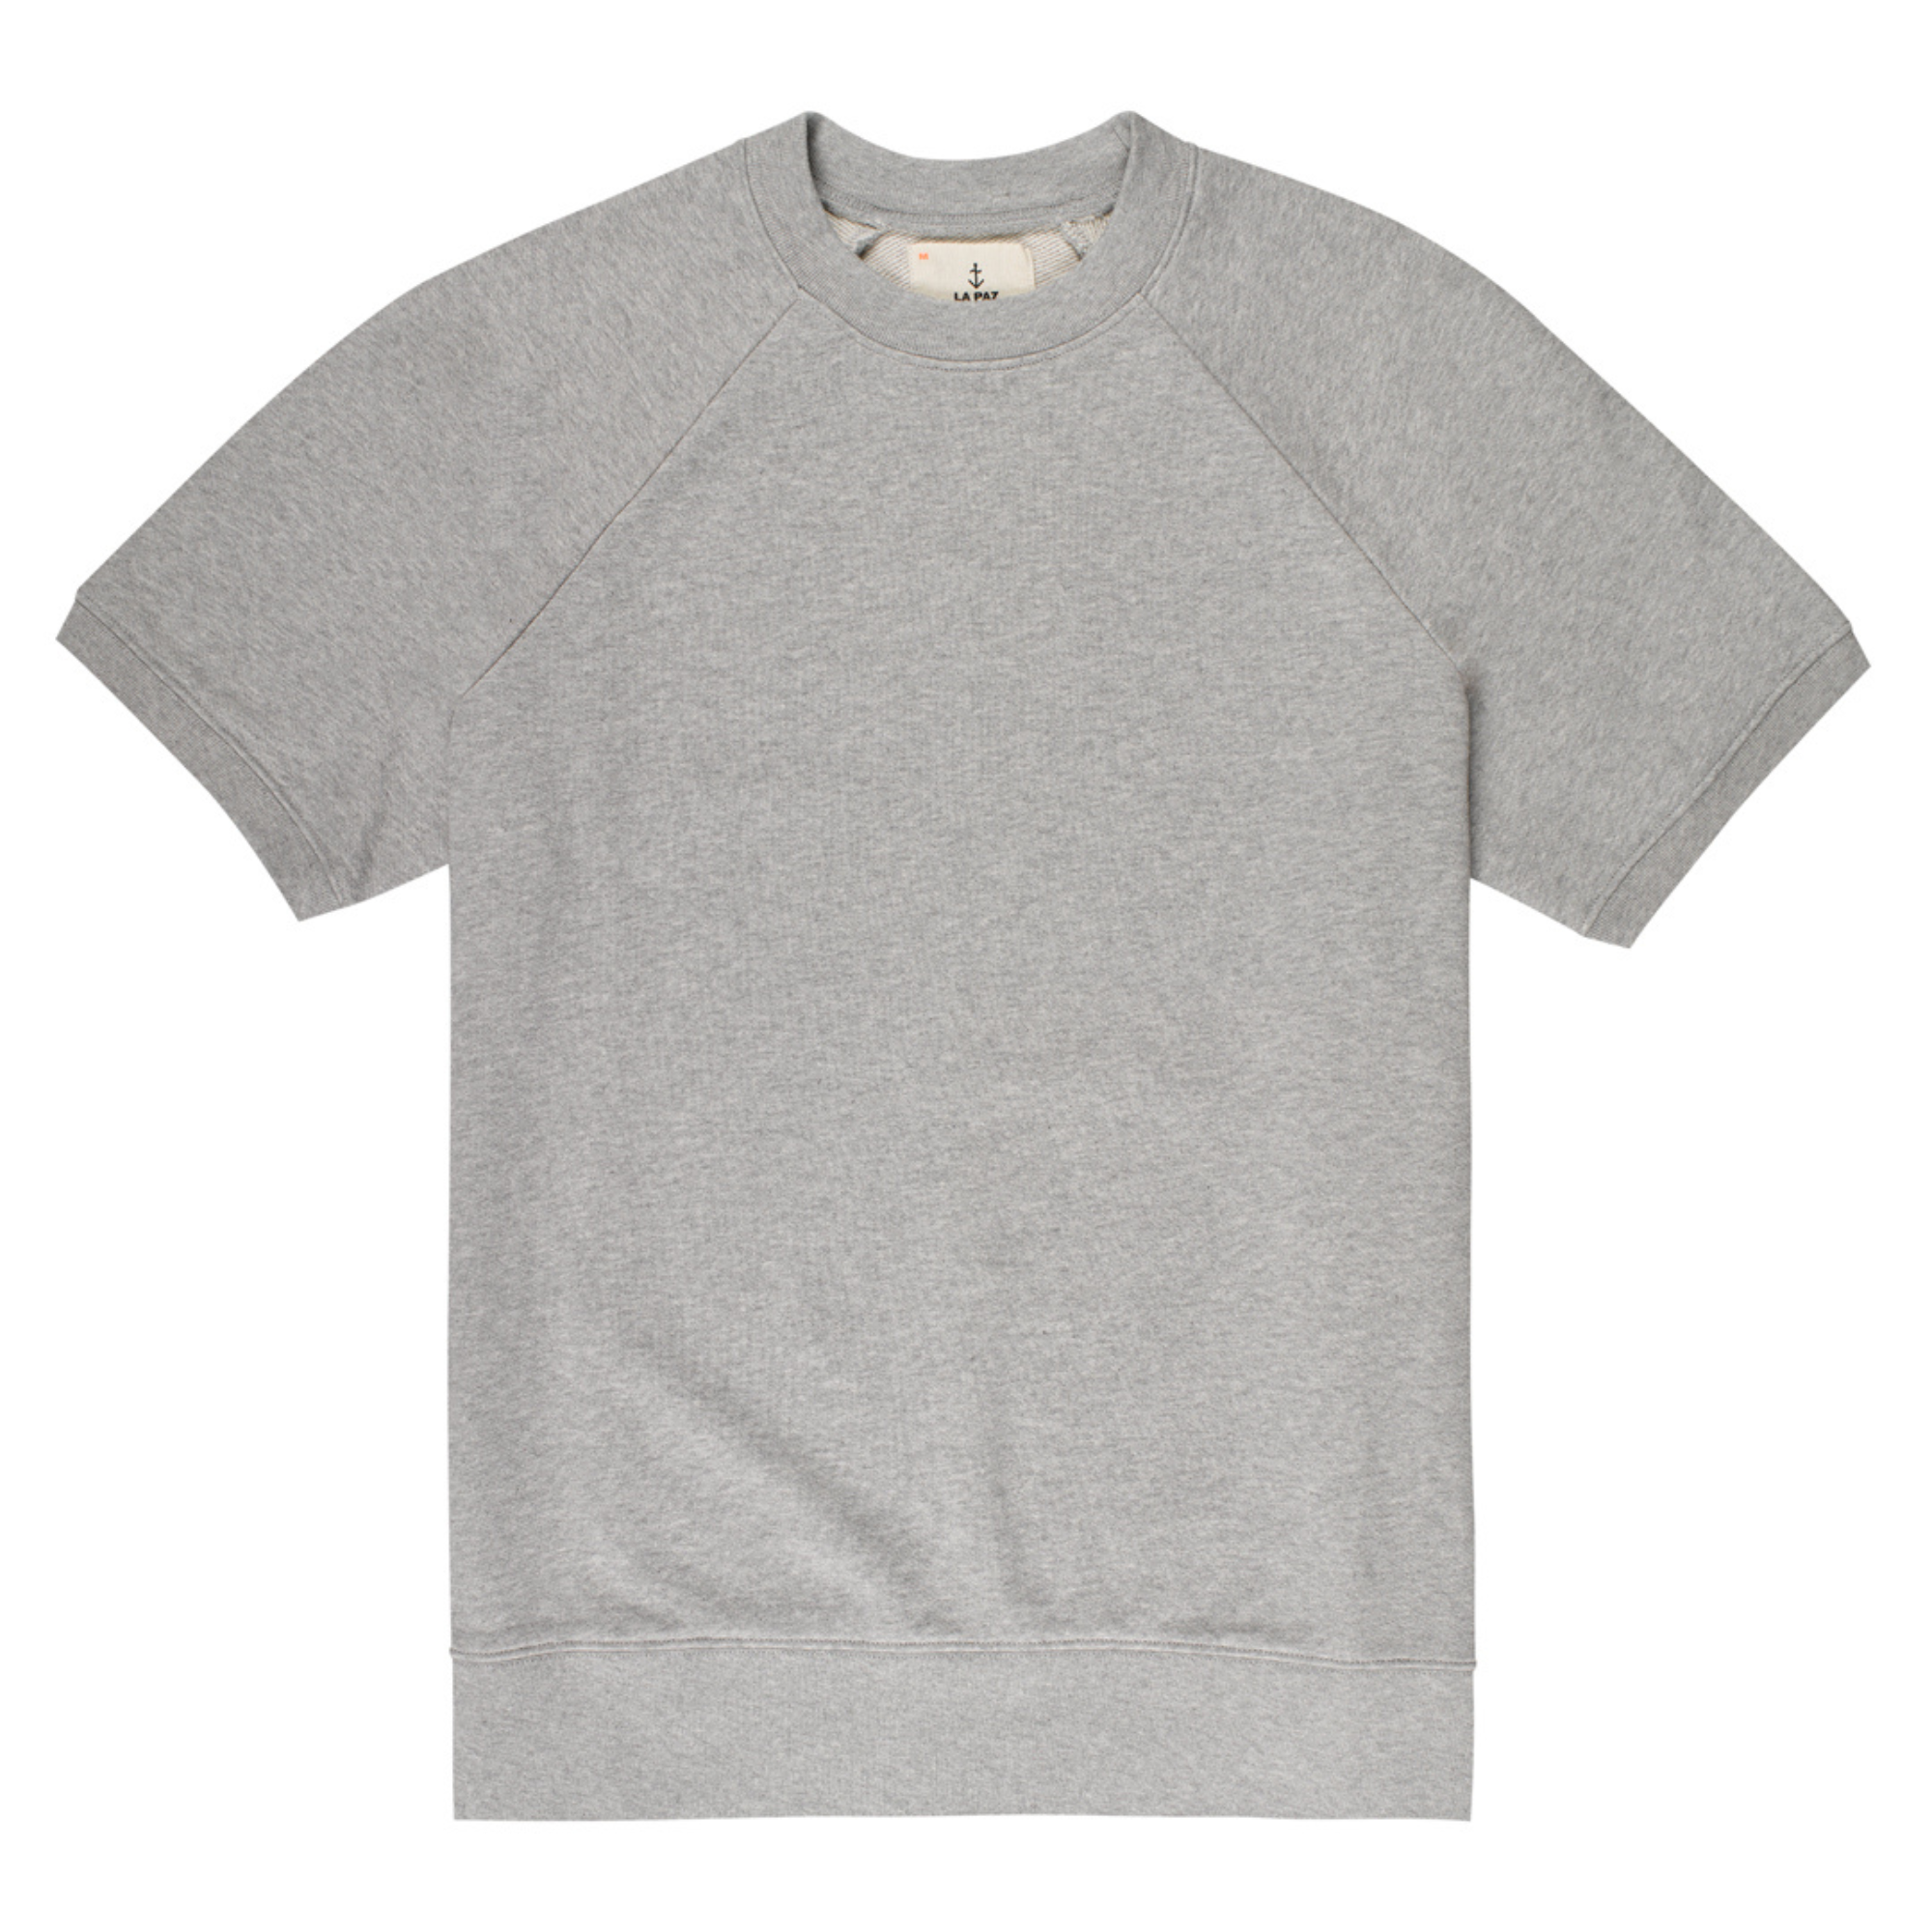 La Paz Paulino Short Sleeve Sweatshirt in Grey